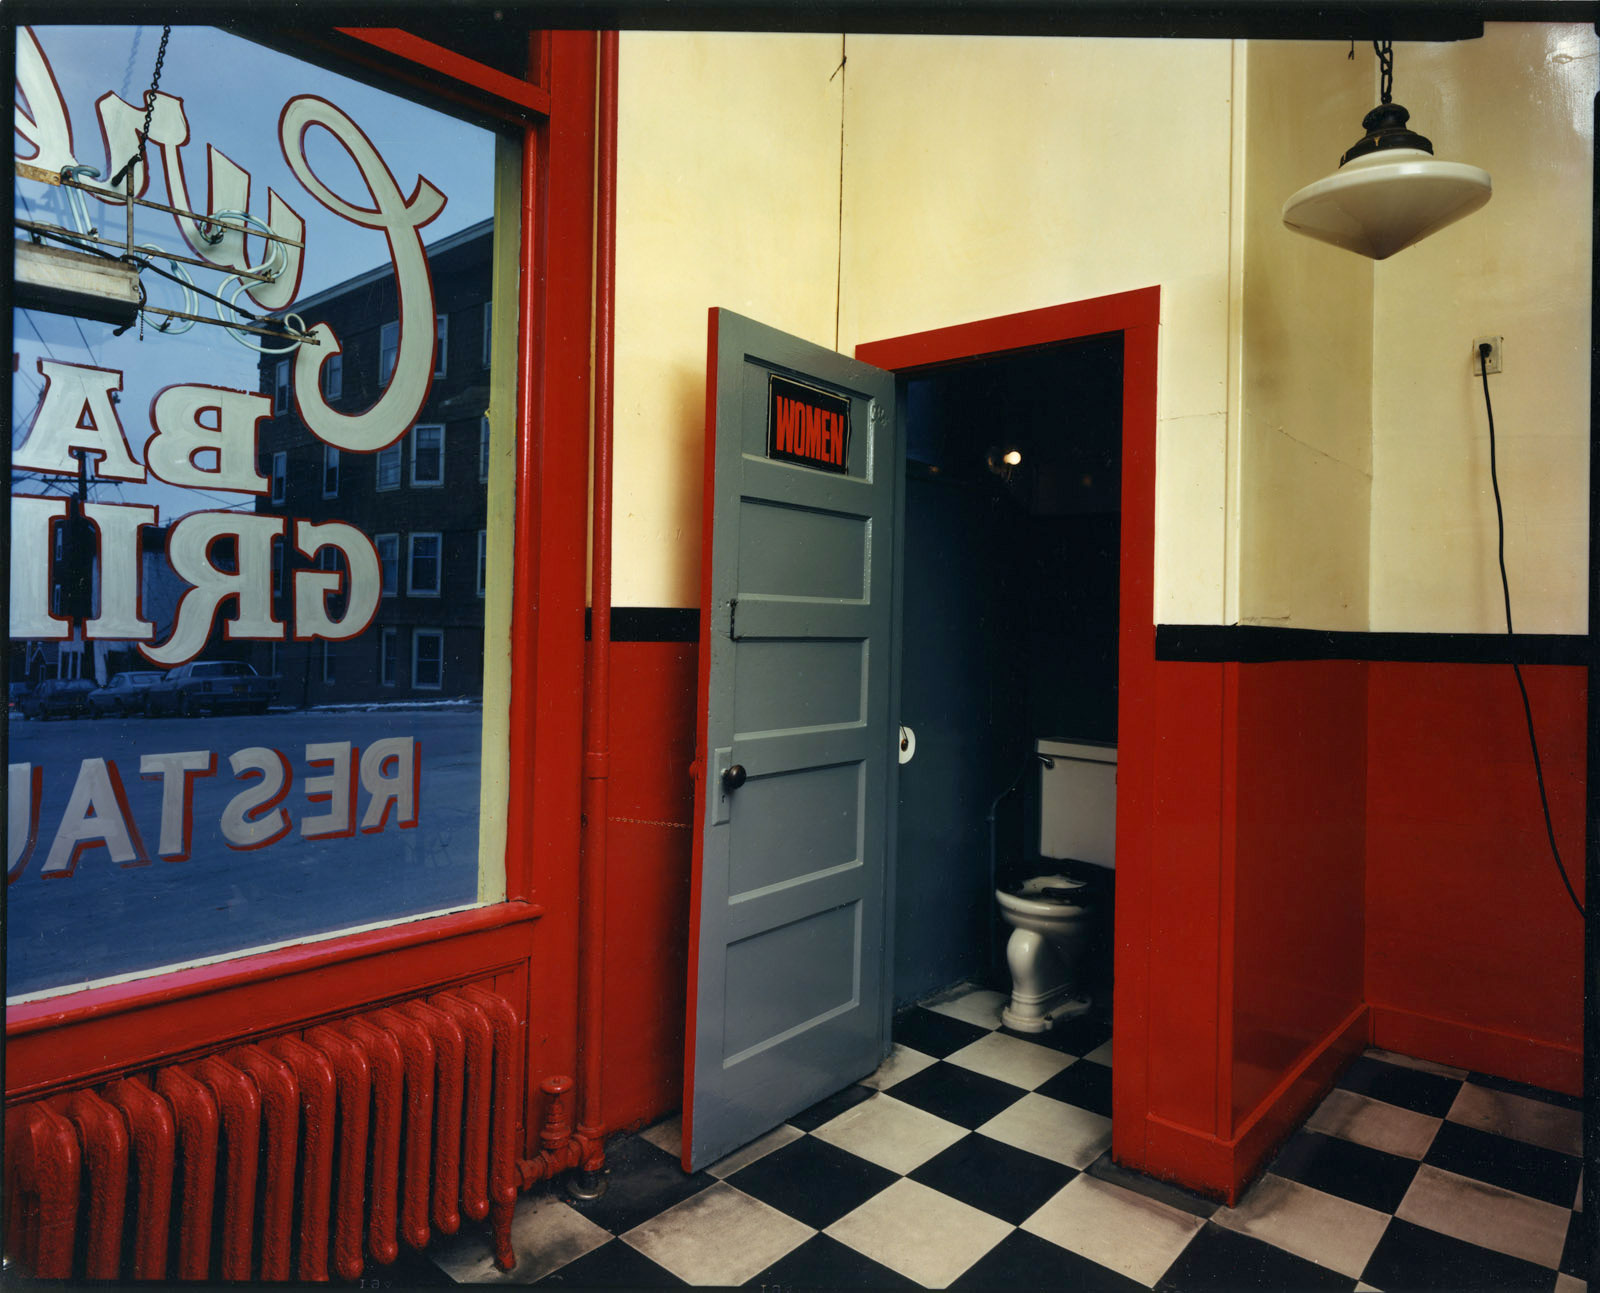 Curley's Bar and Grill, Johnson City, NY, 1986